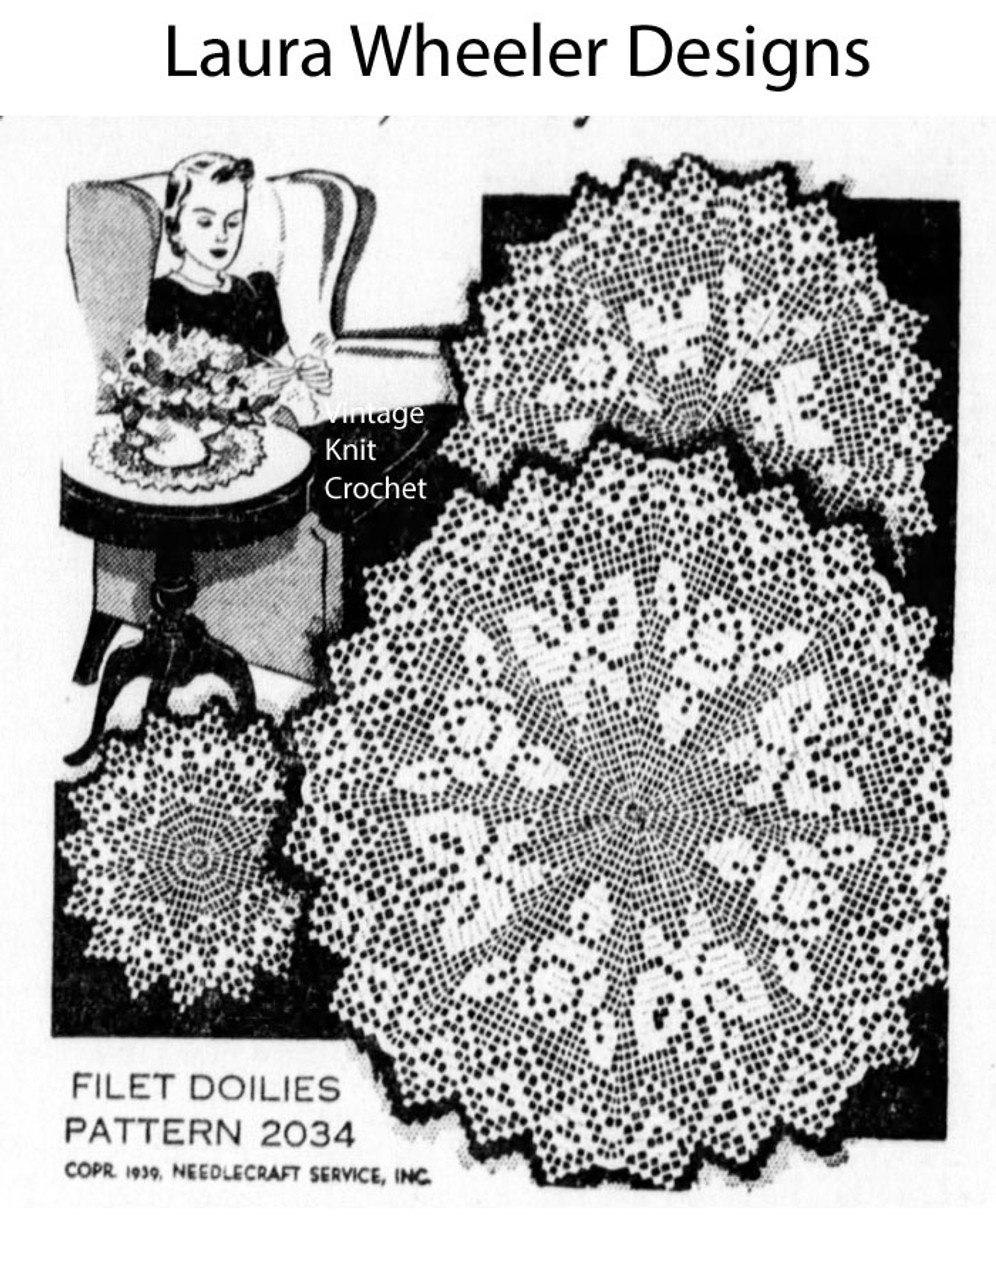 Filet Crochet Butterfly Doilies, 3 sizes, Laura Wheeler 2034